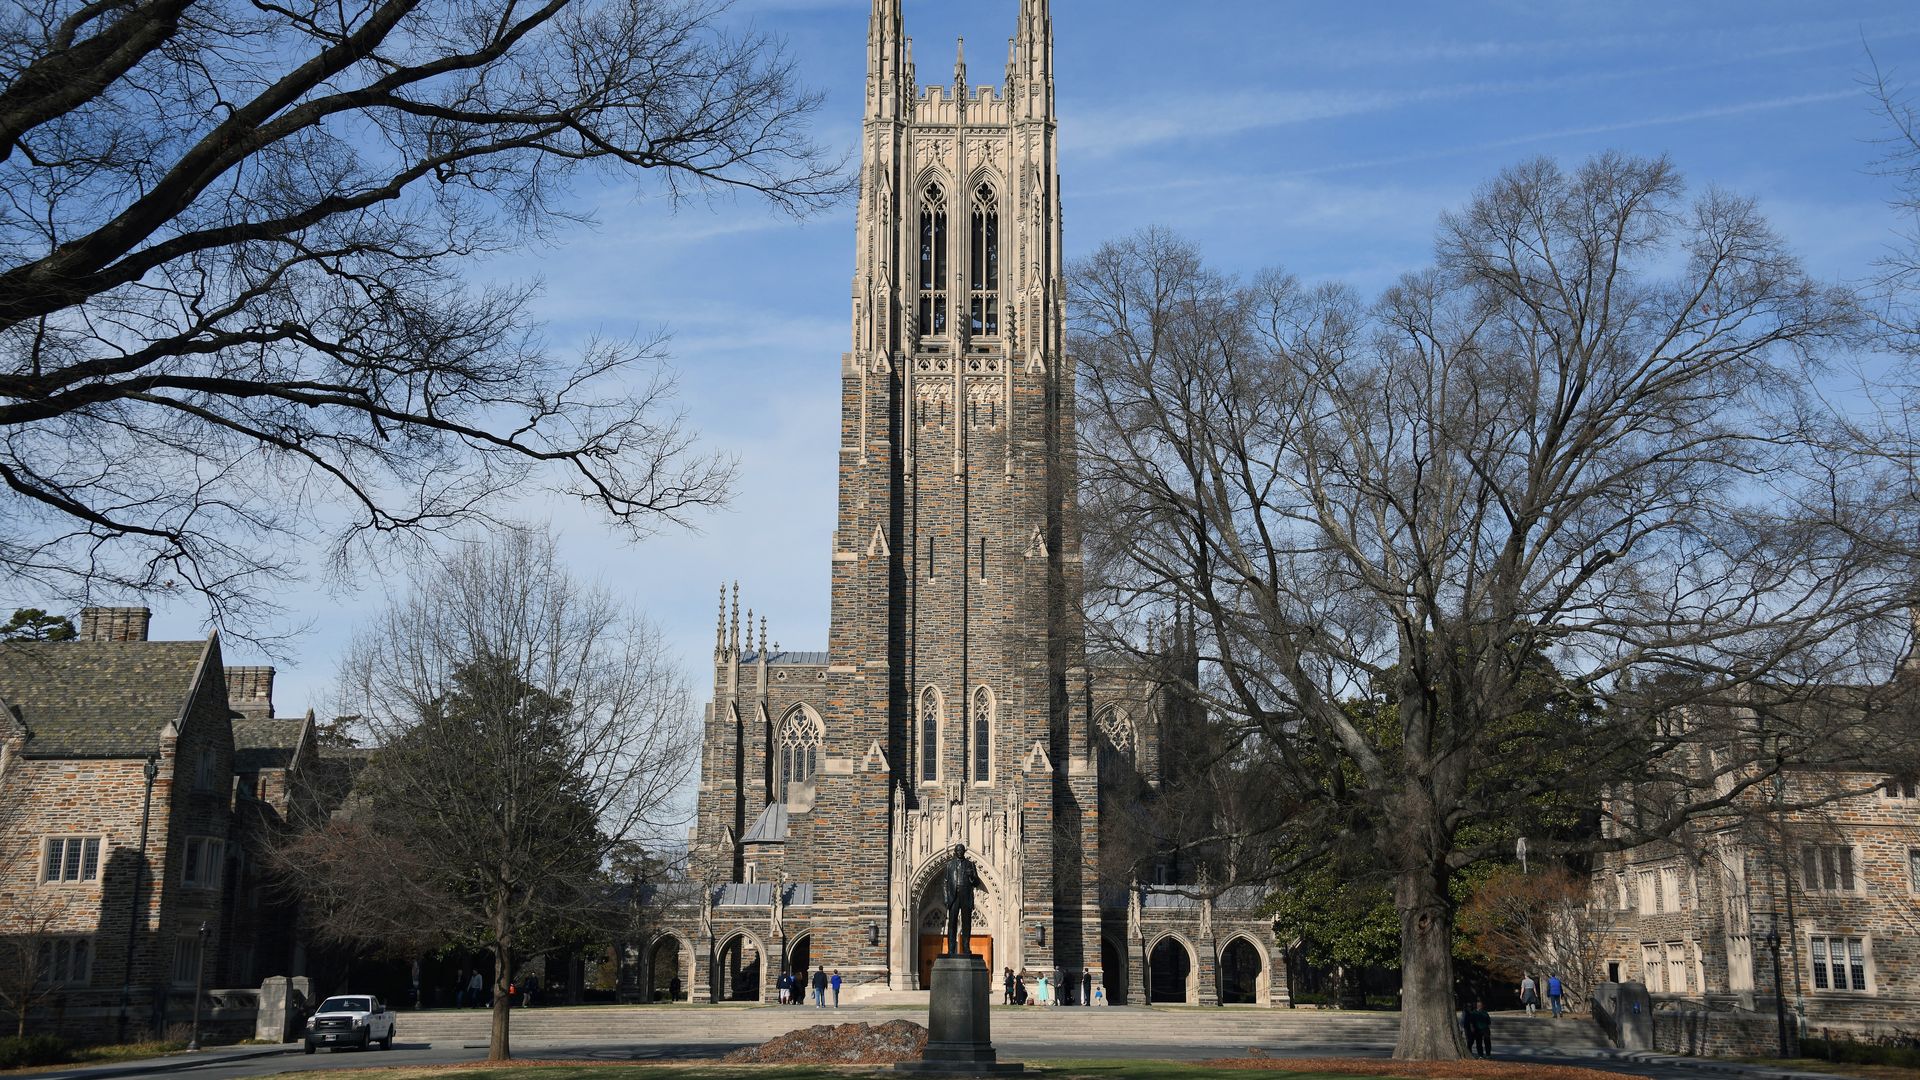 Duke University Chapel seen from a distance